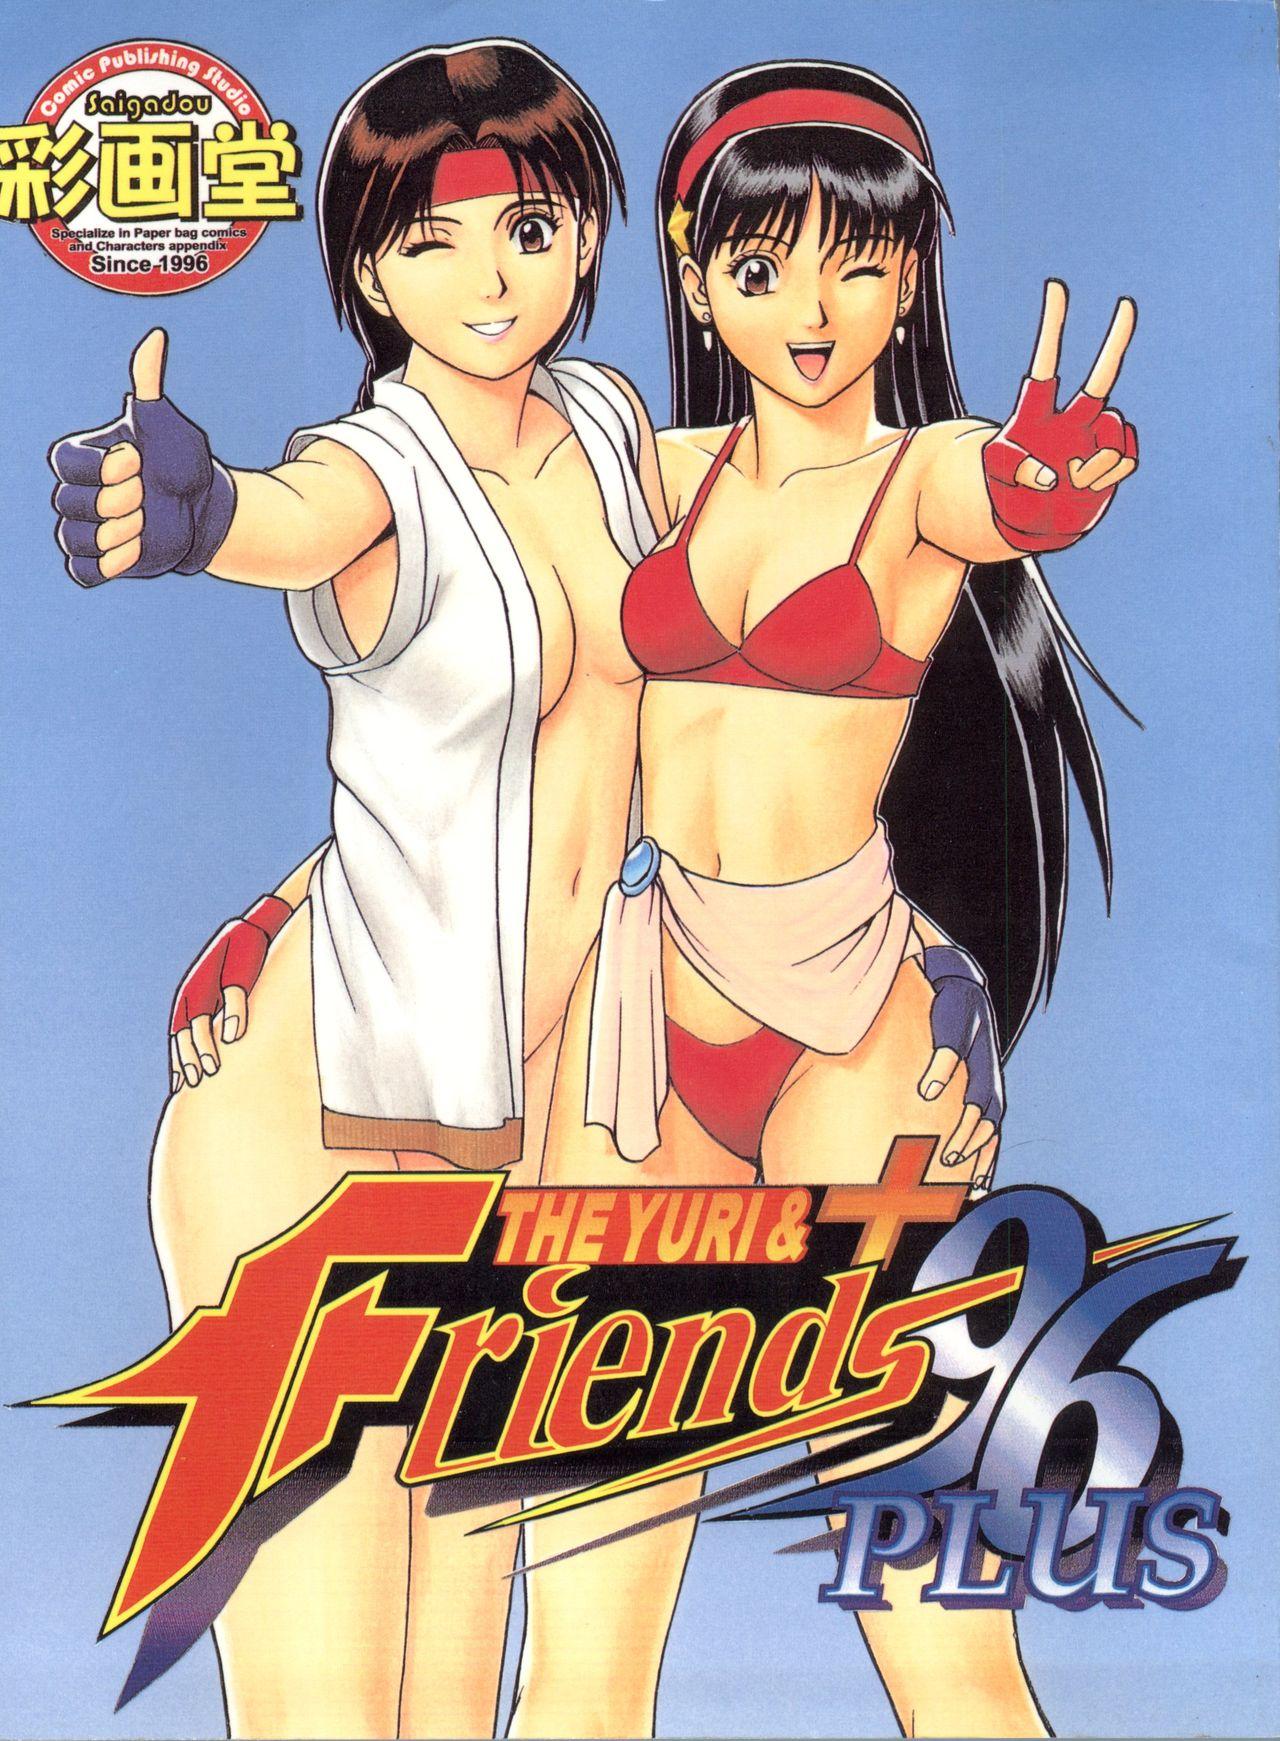 Pauzudo The Yuri&Friends '96 Plus - King of fighters Amante - Page 1